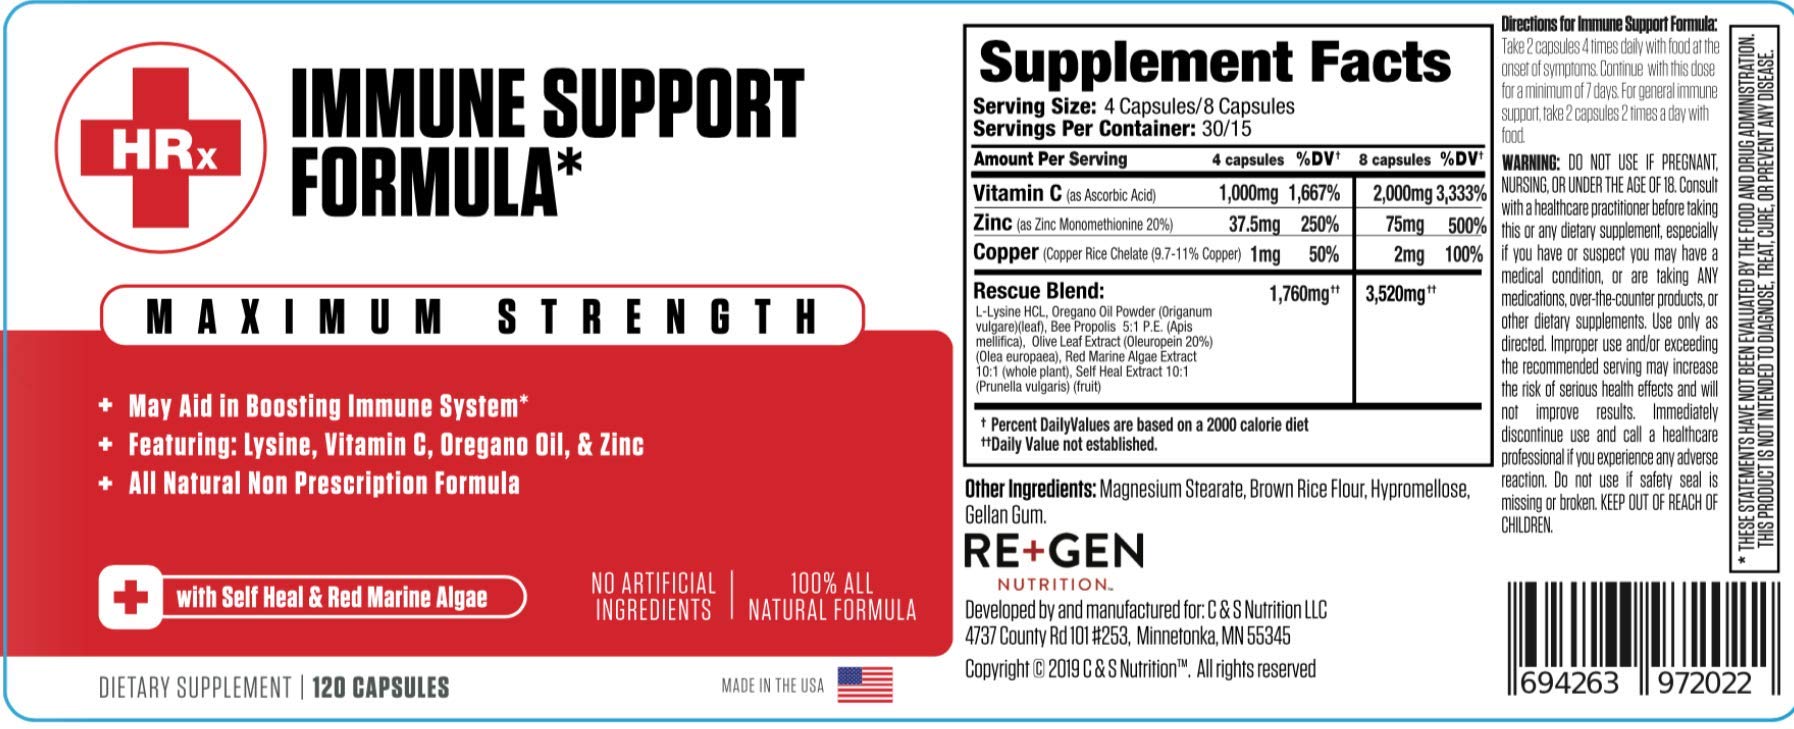 Re+Gen Nutrition Immune Support Formula (H Rescue Discreet) Immune Support Supplement L Lysine, Zinc, Vitamin C, Oregano Oil 120 Capsules